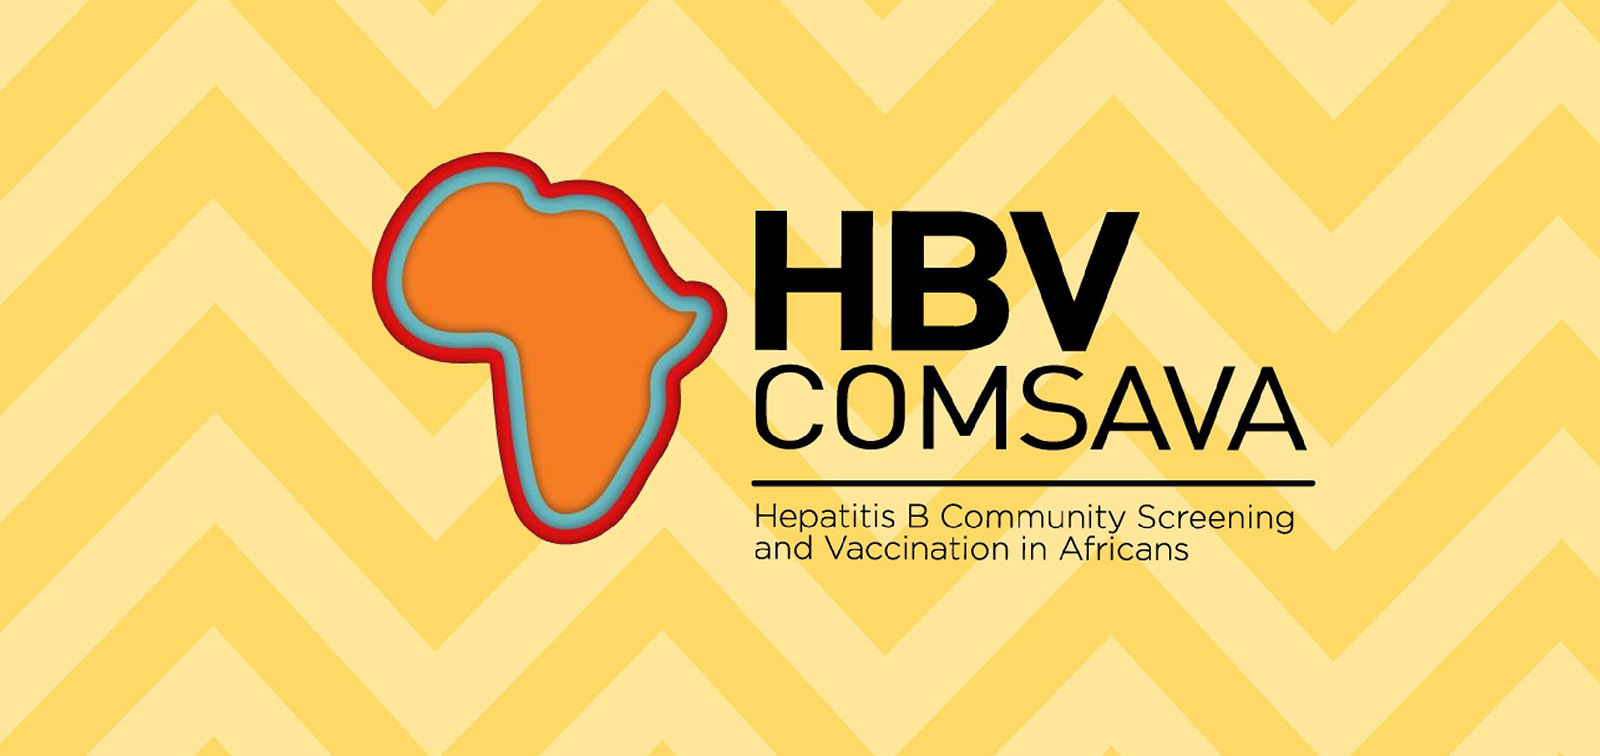 HBV-COMSAVA Project